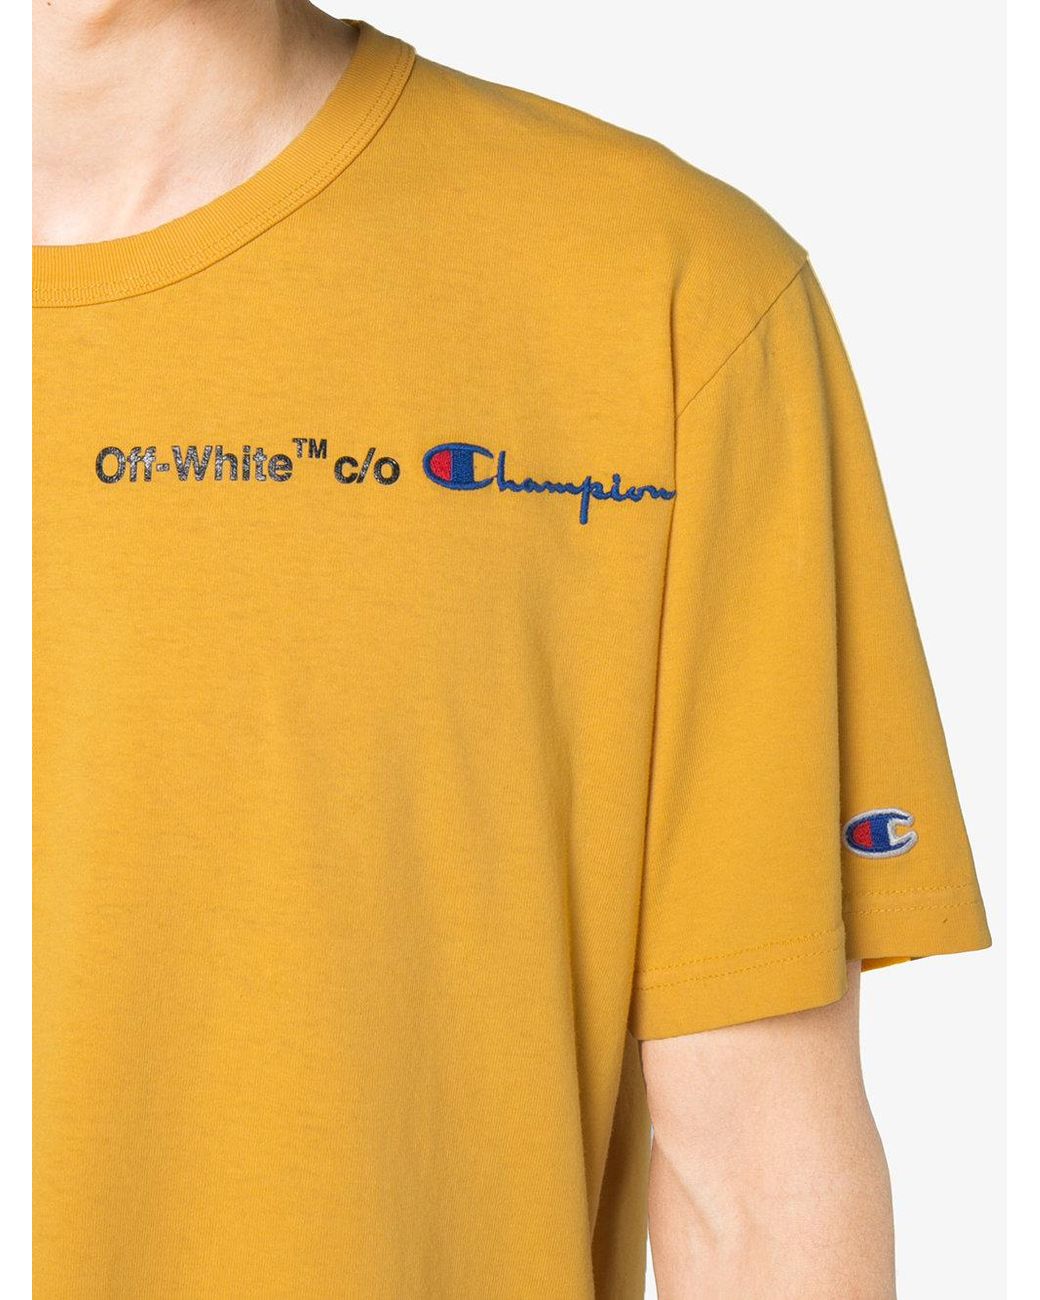 vruchten militie knoop Off-White c/o Virgil Abloh X Champion Yellow T-shirt for Men | Lyst